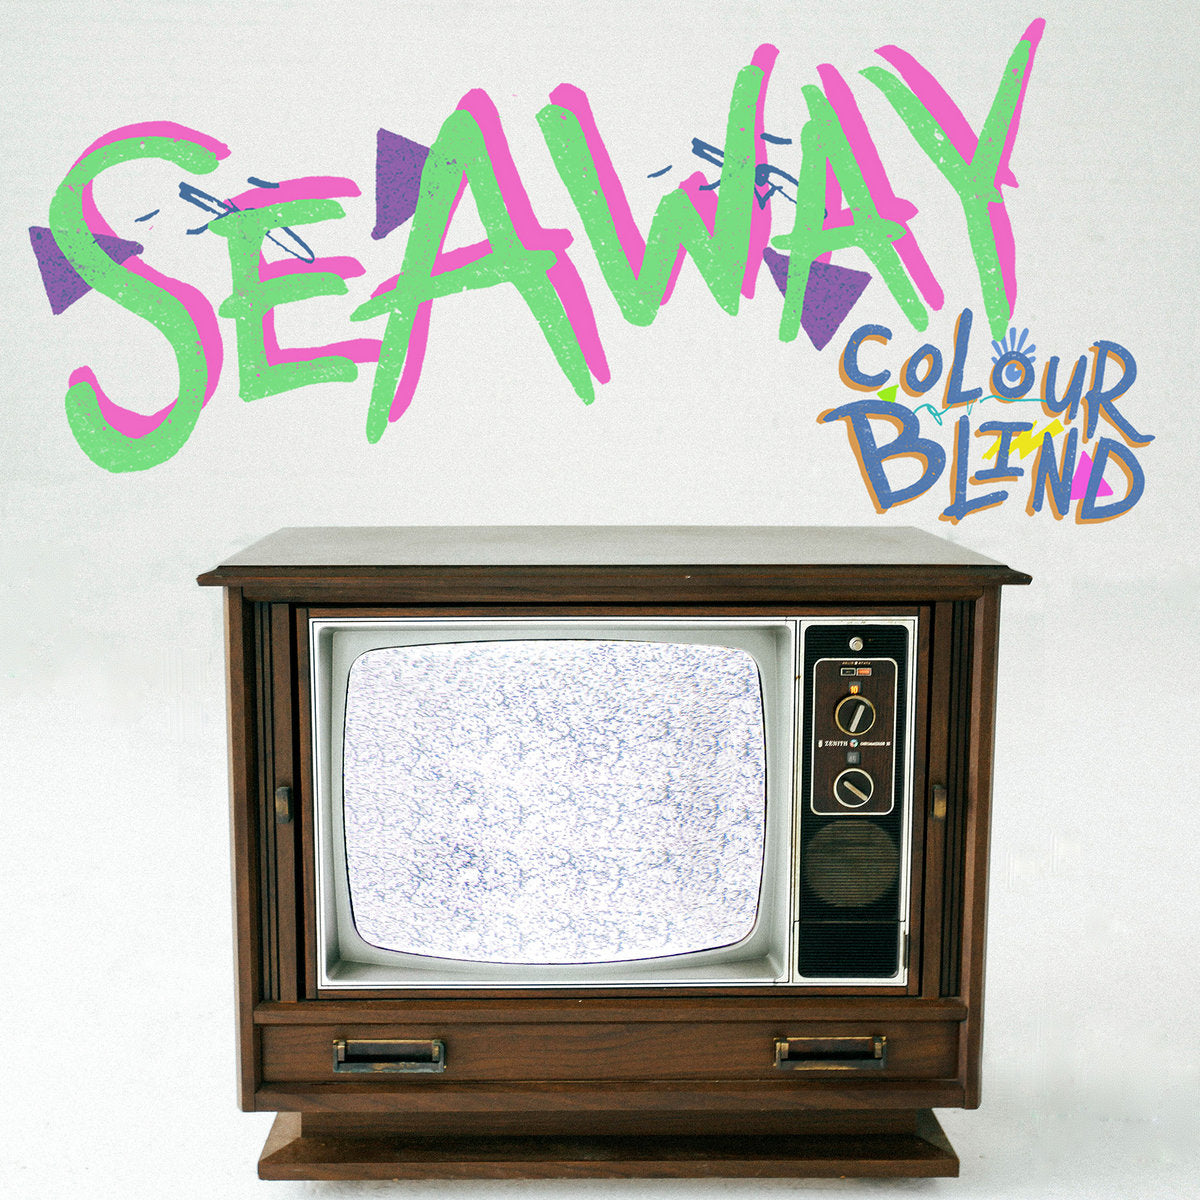 Seaway "Colour Blind" CD